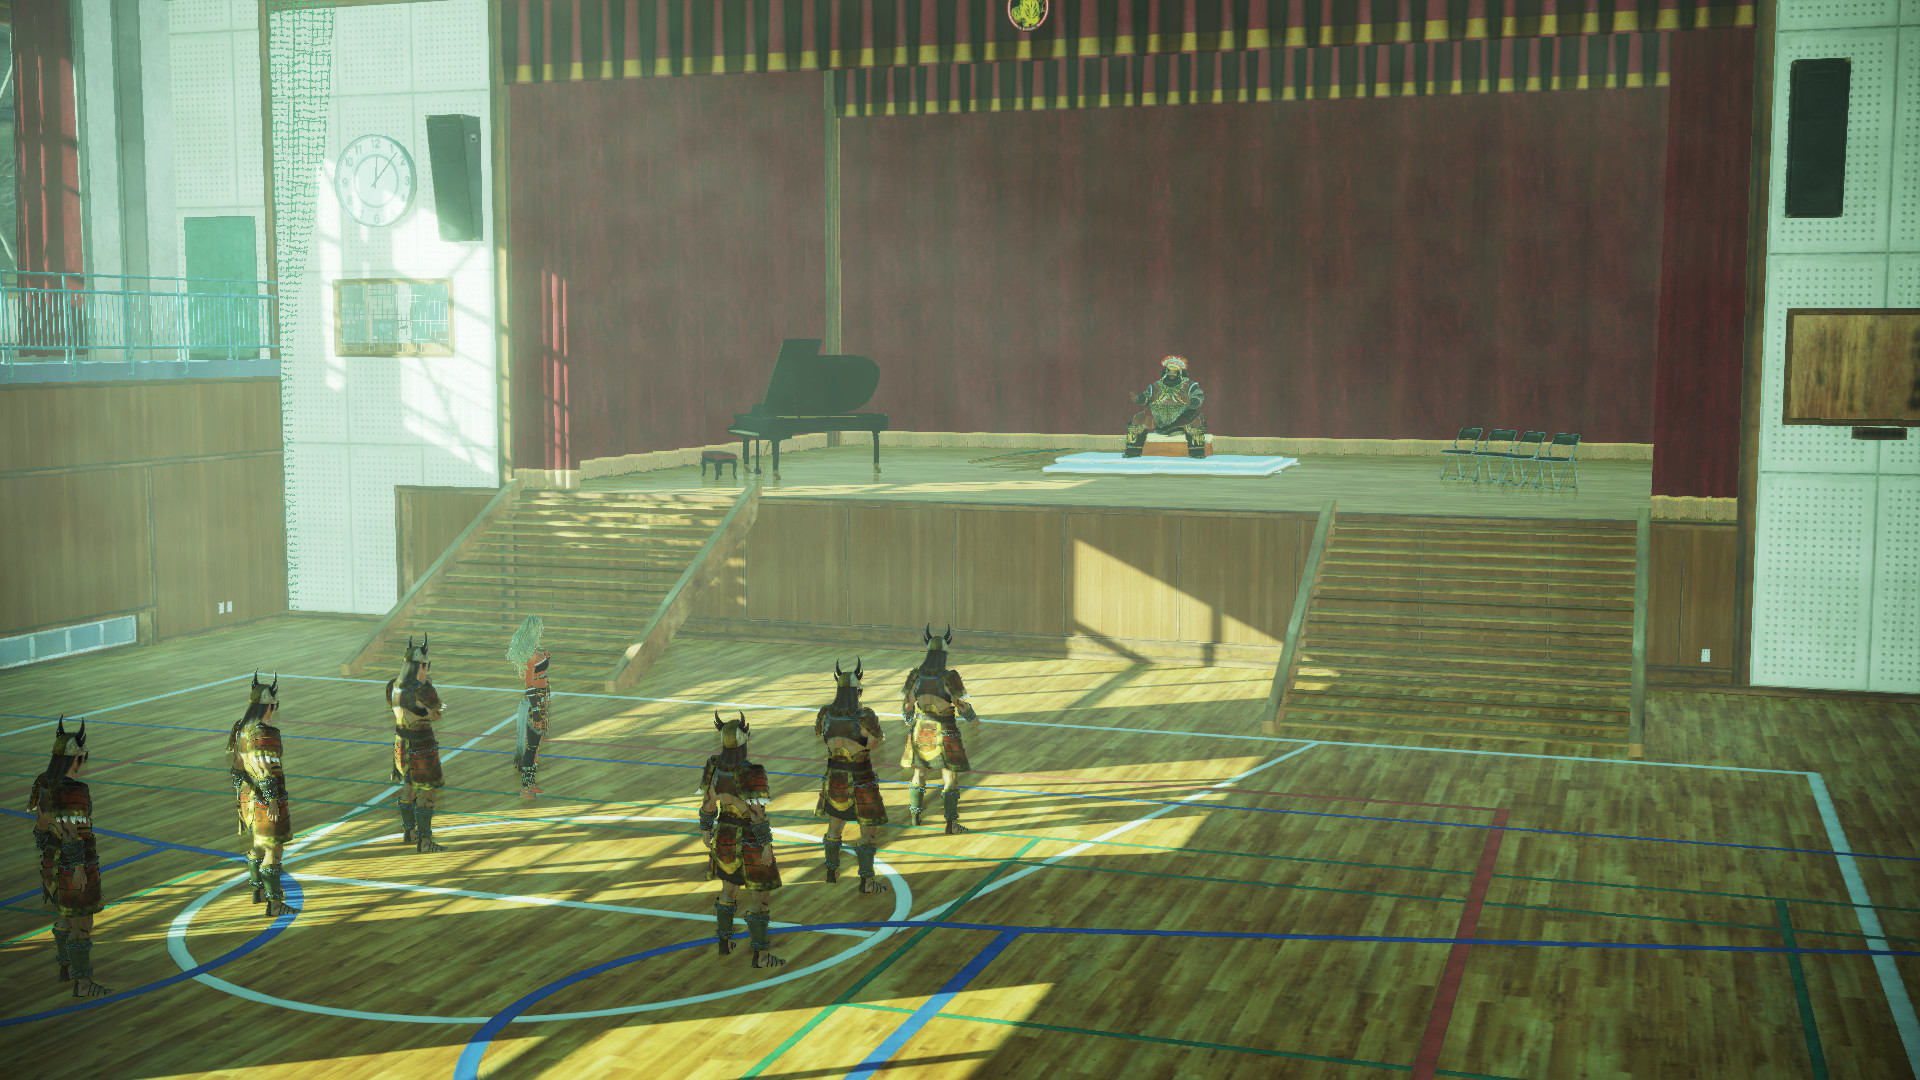 DYNASTY WARRIORS 9 Empires - School Gymnasium Featured Screenshot #1